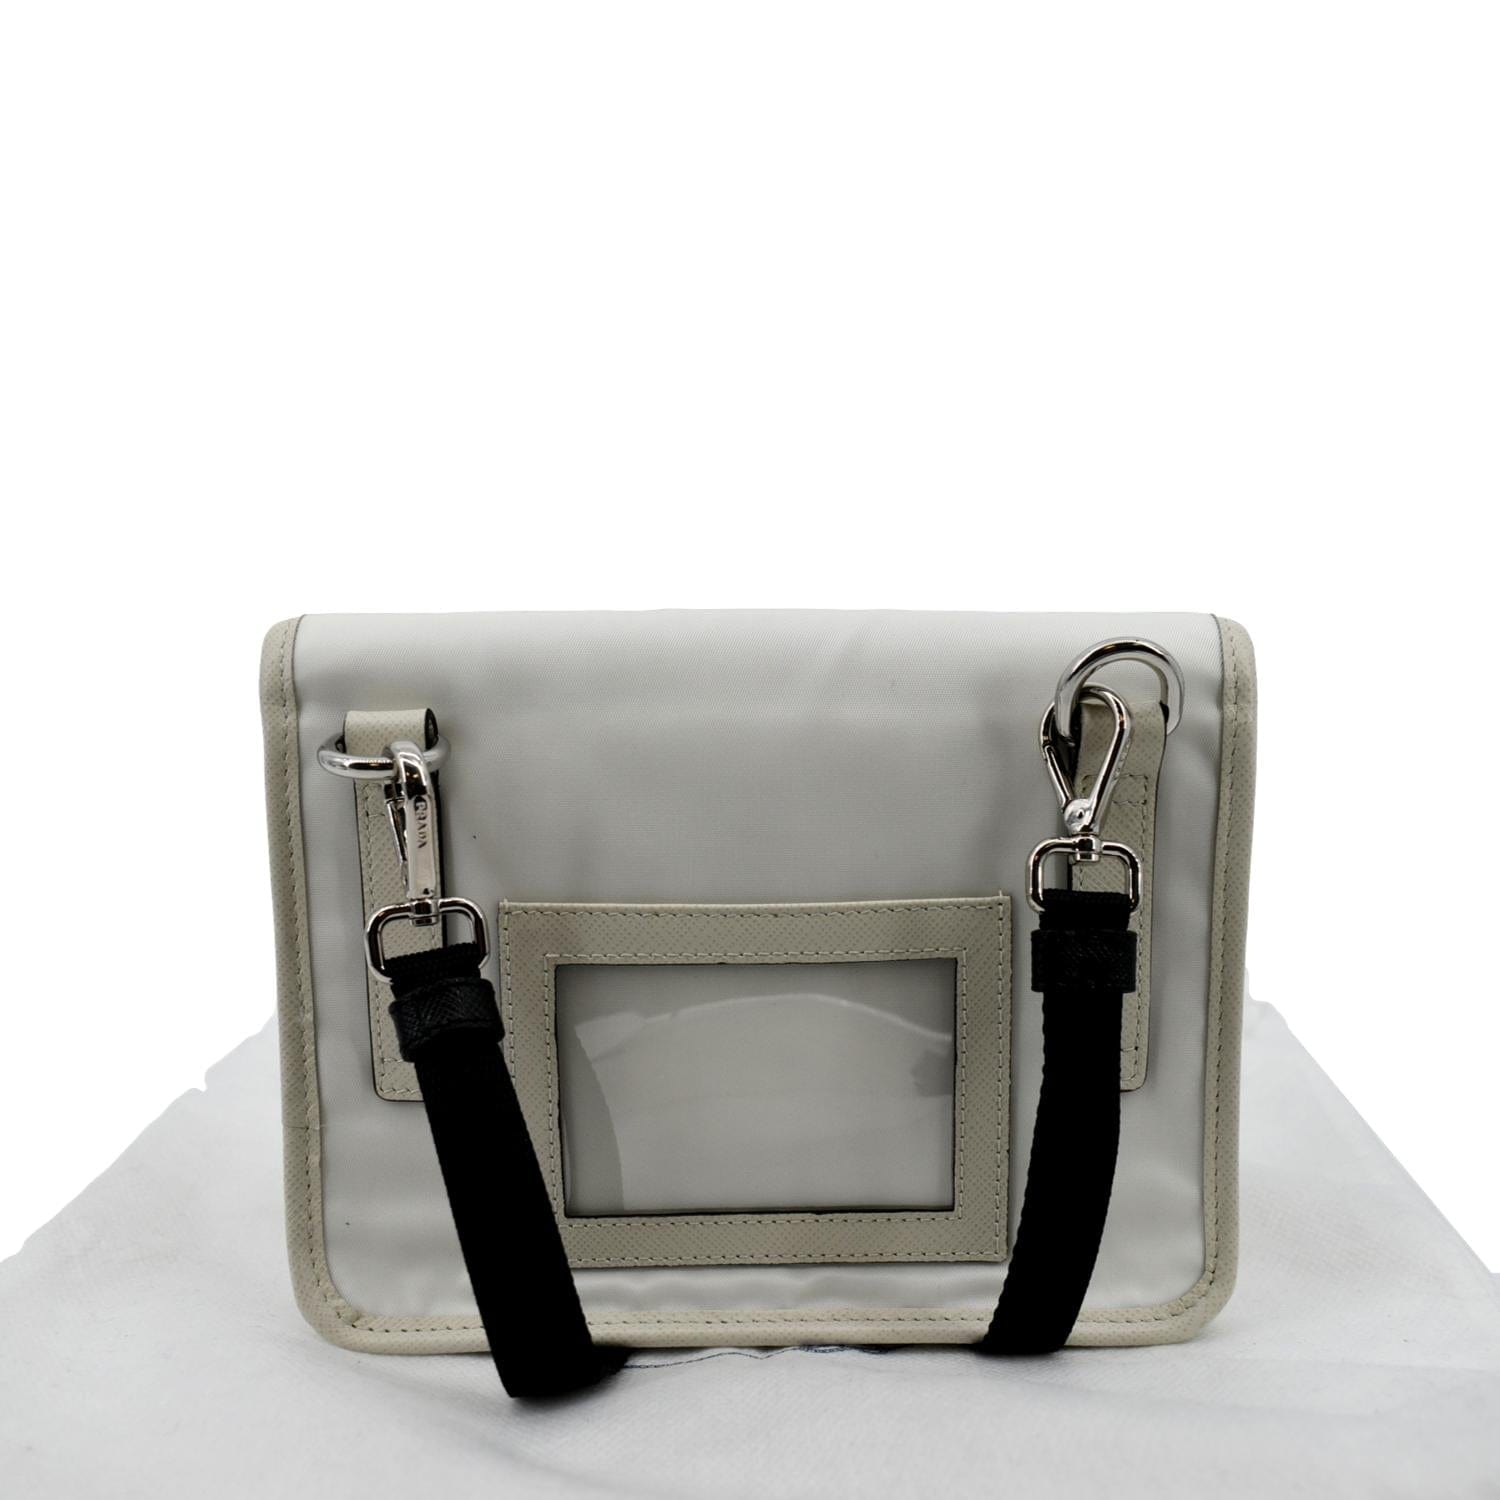 USED Prada Black Re-Nylon and Black Saffiano Leather Briefcase Bag  AUTHENTIC